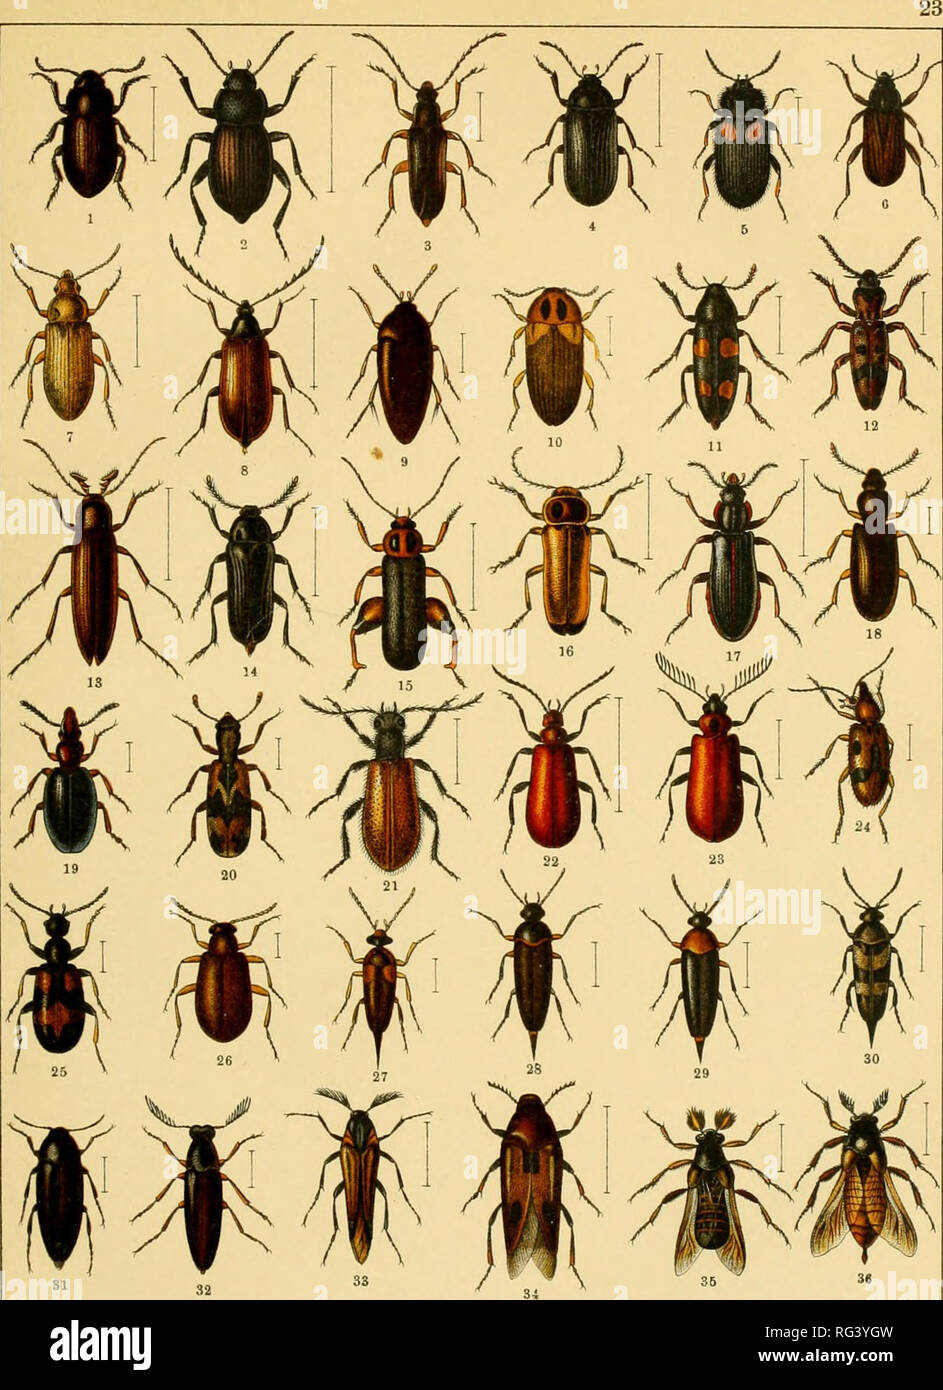 . Calwers Käferbuch; einfürhrung in die kenntnis der käfer Europas. Beetles. 1. Helops caraboides. 2. Hei. coeruleus. 3. Allecula mono. 4. Prionychus ater. 5. Mycetochara humeralis. 6. Omophlus lepturoides. 7. Cteniopus sulphureus. 8. Oonodera ceramboides, 9. Orchesia micans. 10. Hallo- menus binotatus. 11. Dircaea australis. 12. Hypulus bifasciatus. 13. Serropalpus barbatus. 14. Melandrya car.iboides. 15. Osphya bipunctata cf. 16. O. bipunctata J. 17. Pytho depressus. IS. Sphaeriestes castaneus. 19. Rhinosimus nificoUis. 20. Agnathus decoratus. 21. Lagria hirta. 22. Pyrochroa coccinea. 23. Py Stock Photo